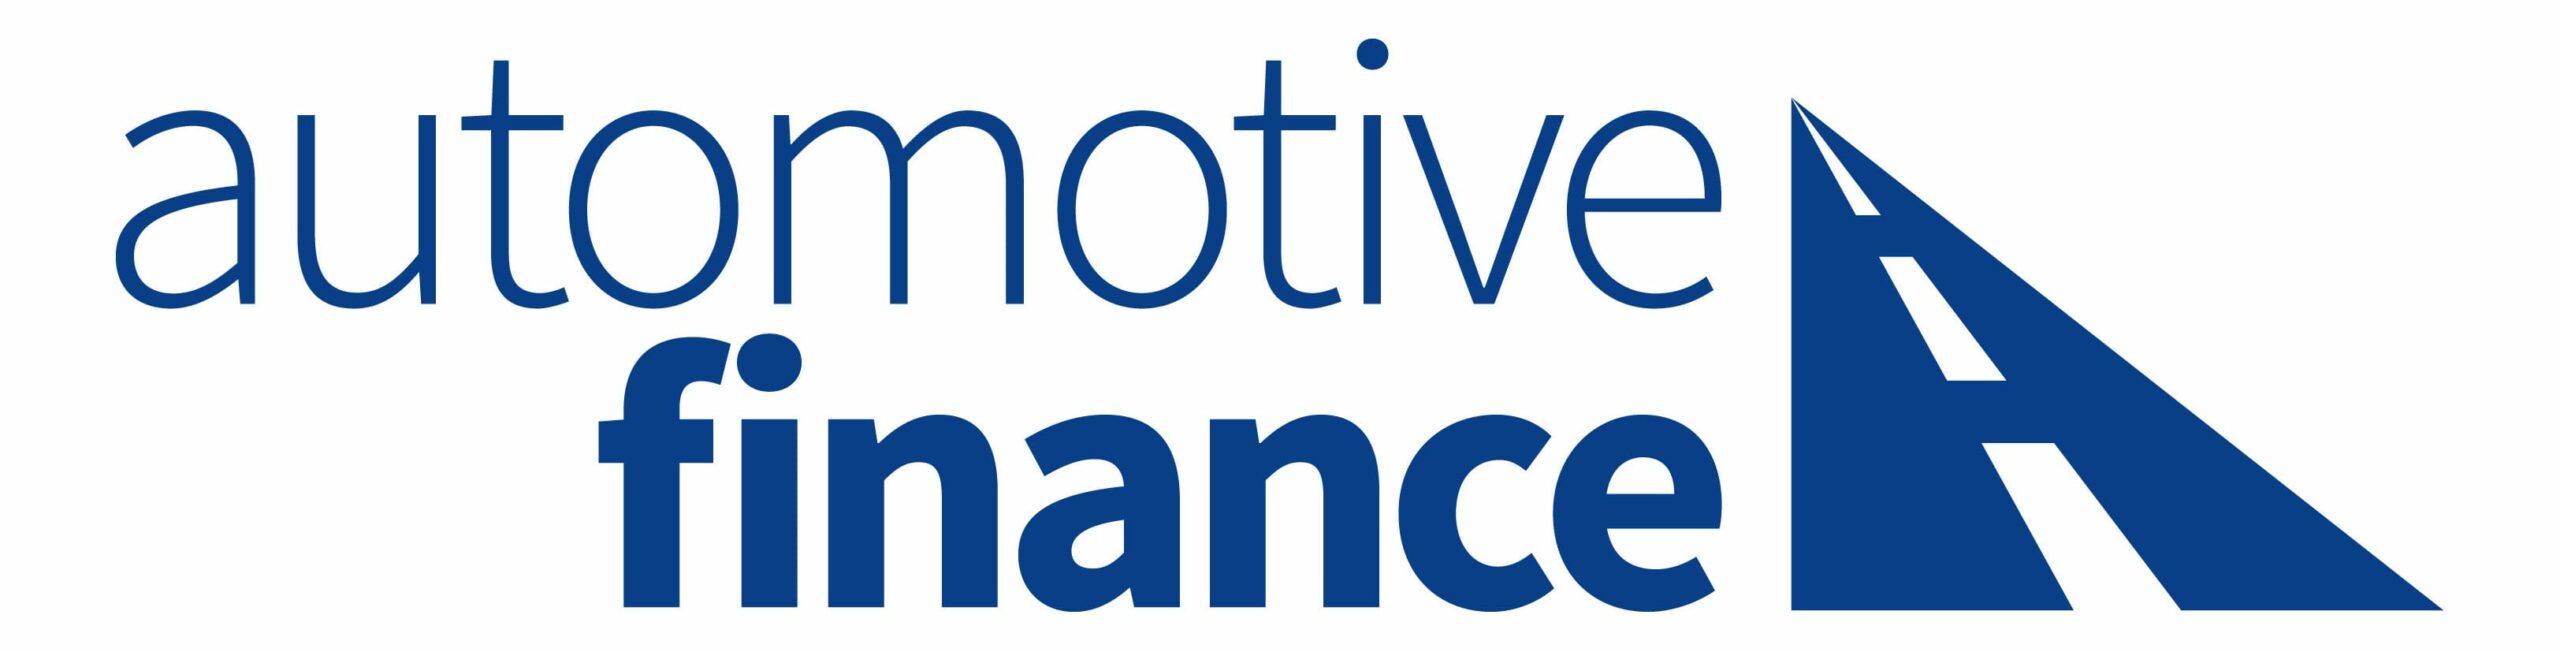 Automotive Finance Logo Colour On White 2 1 Scaled